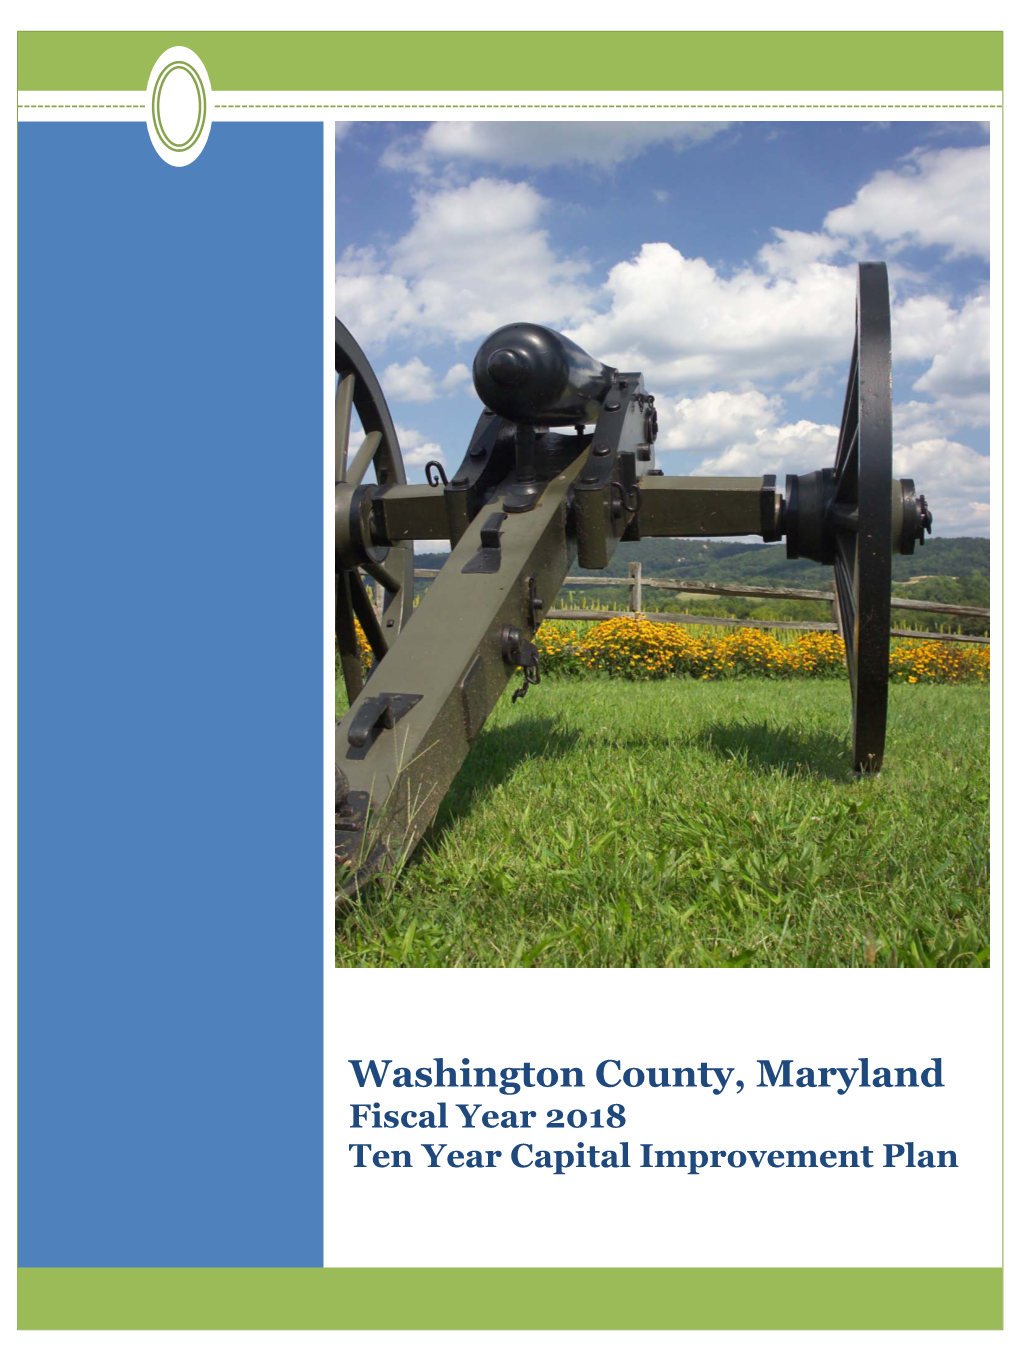 Washington County, Maryland Fiscal Year 2018 Ten Year Capital Improvement Plan